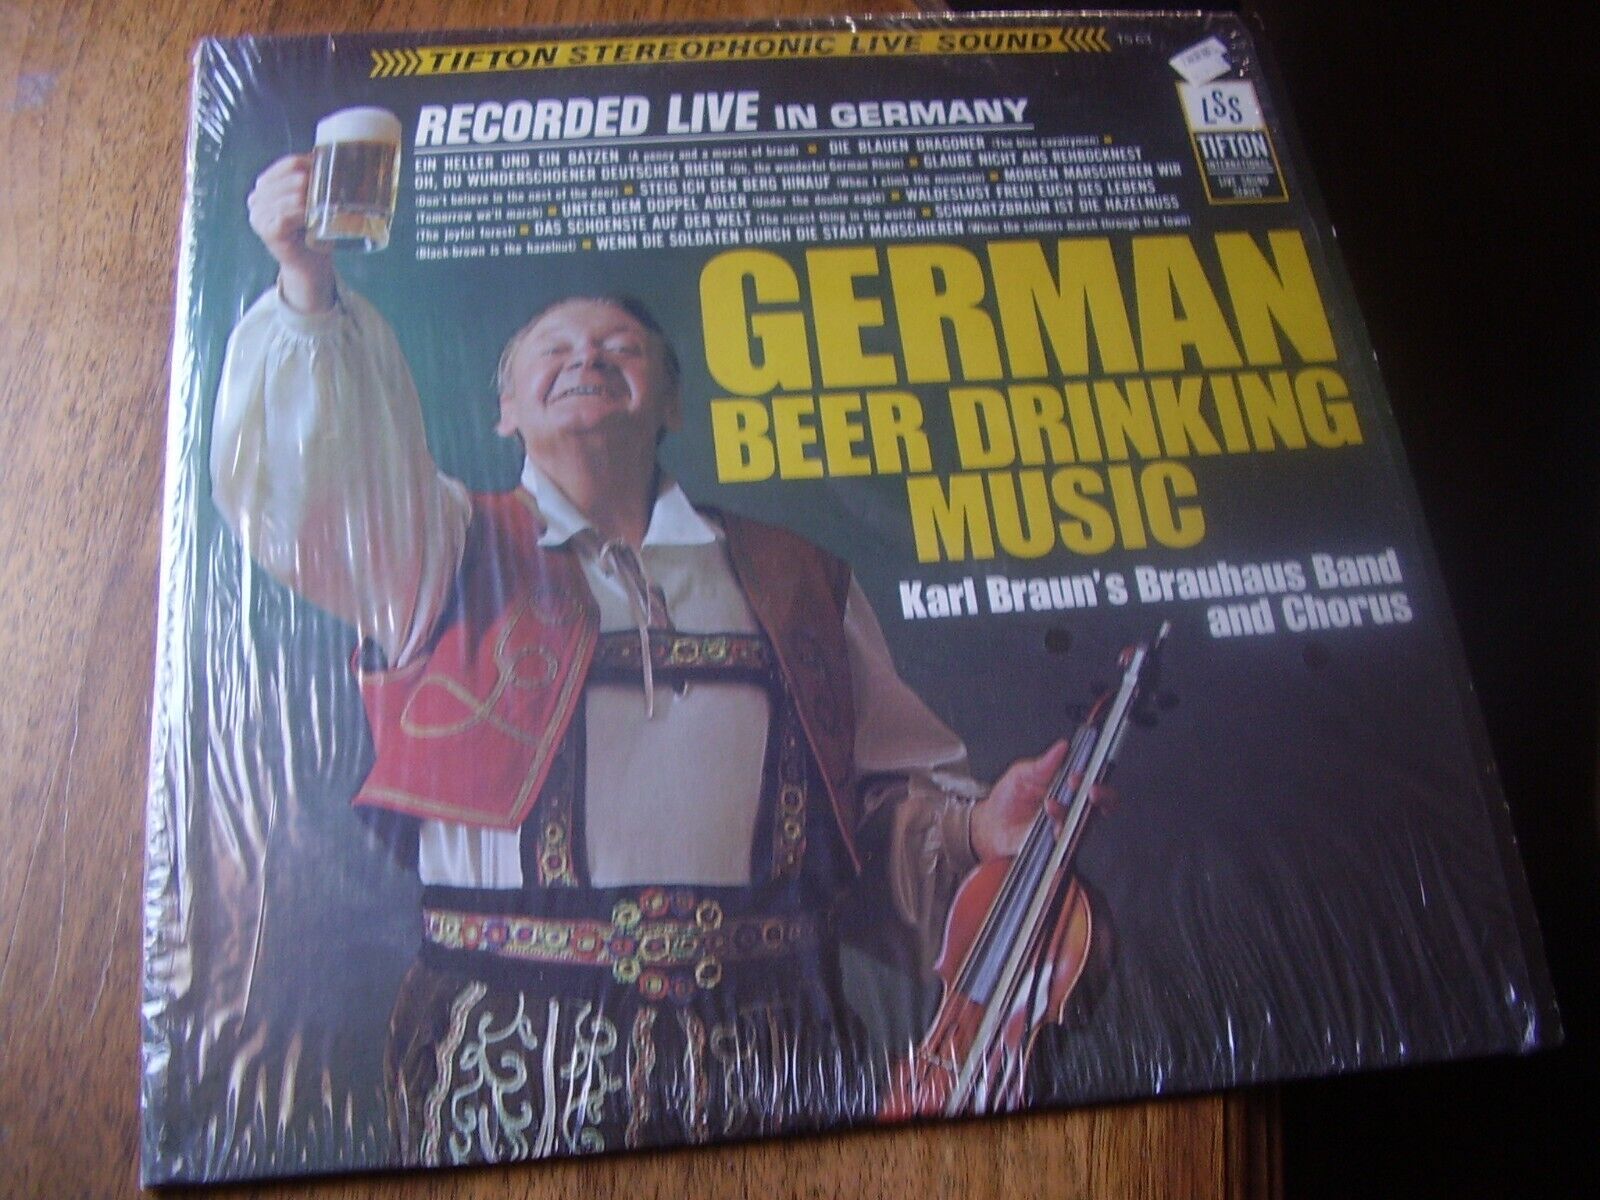 Karl Braun' German Beer Drinking Music Vinyl LP